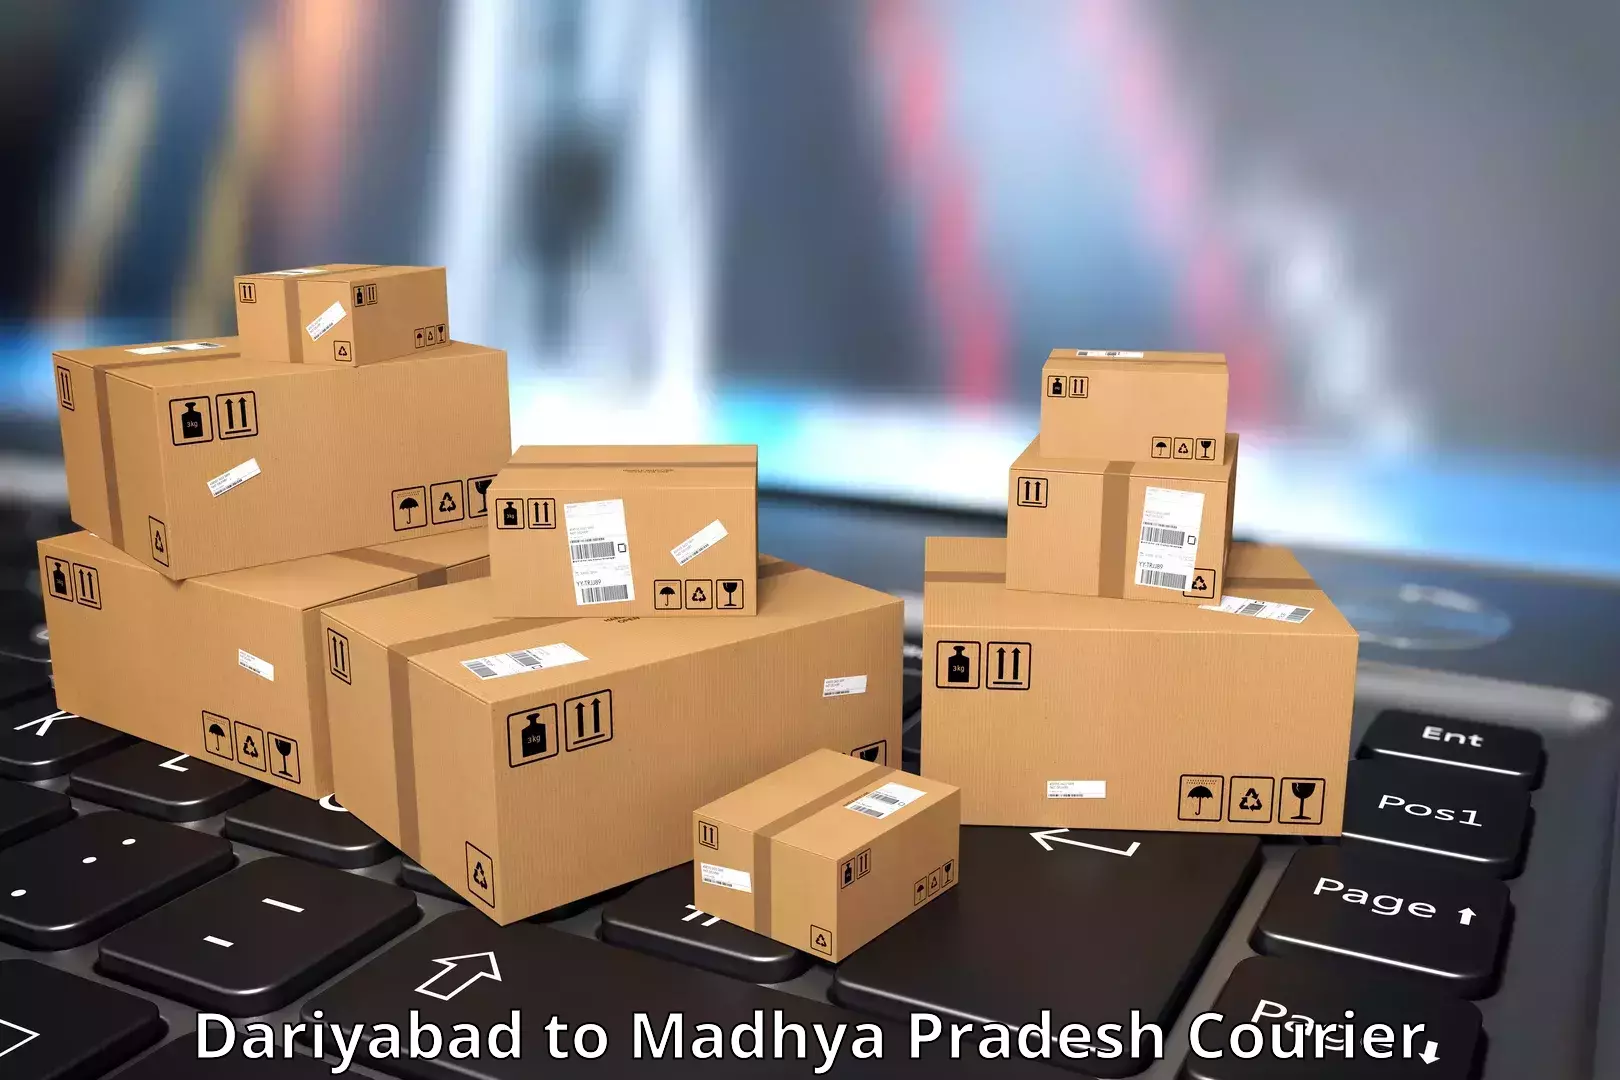 Courier service innovation in Dariyabad to Bargawan